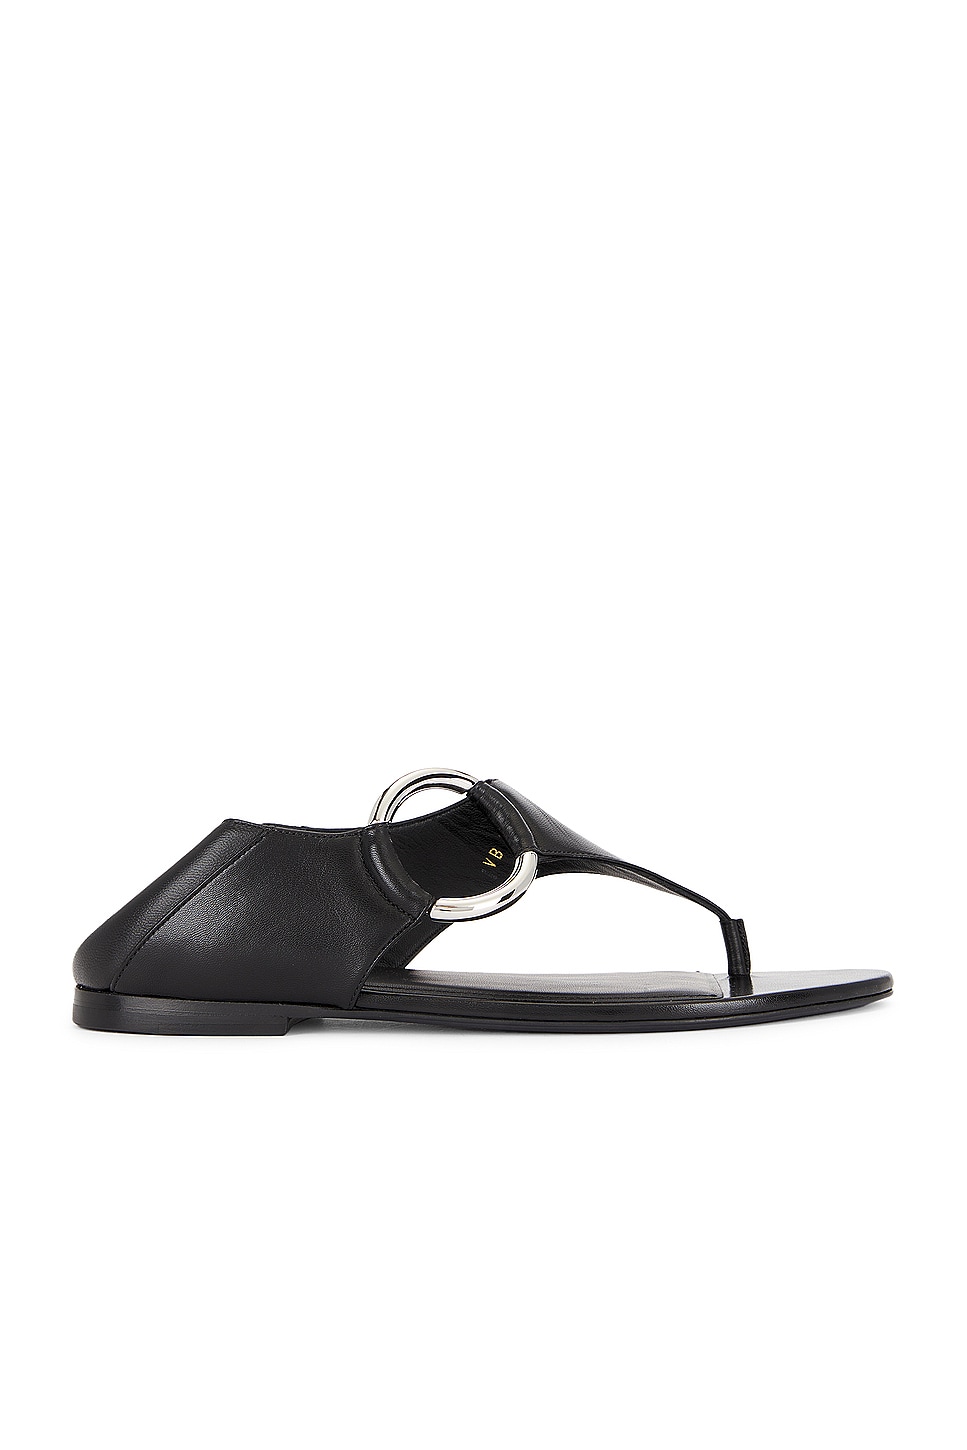 Image 1 of Saint Laurent Xsl Flat Sandal in Noir